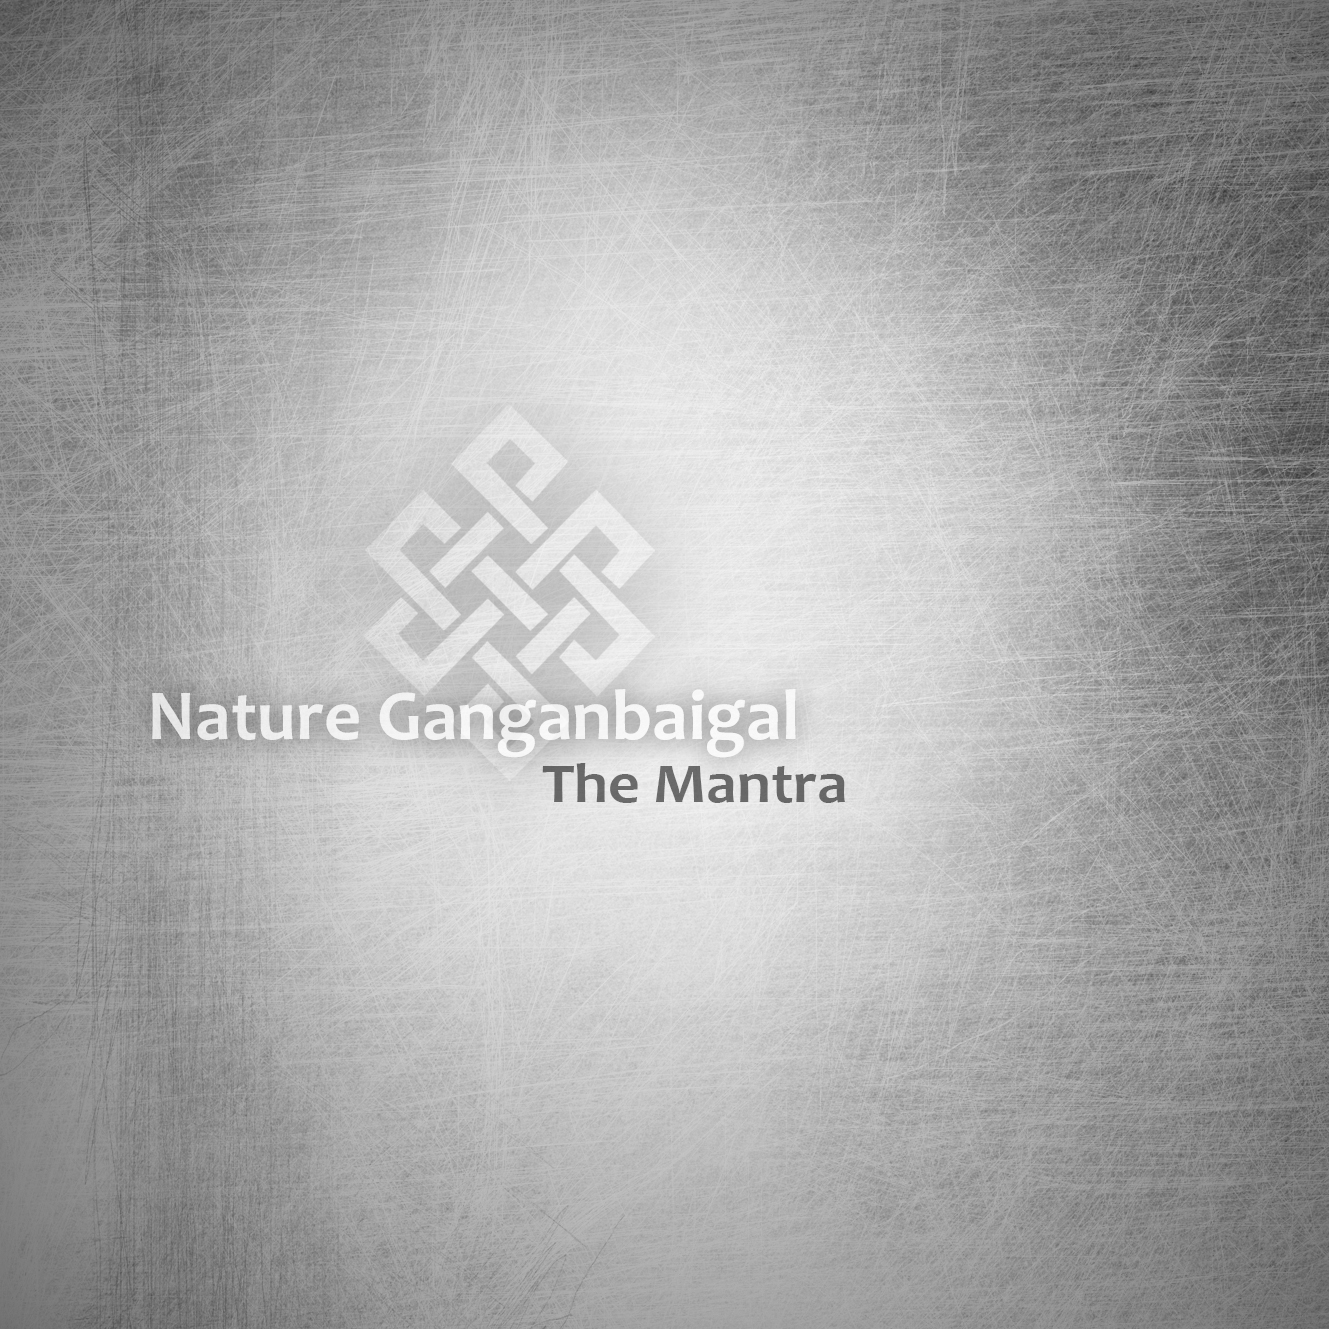  Nature Ganganbaigal – The Mantra